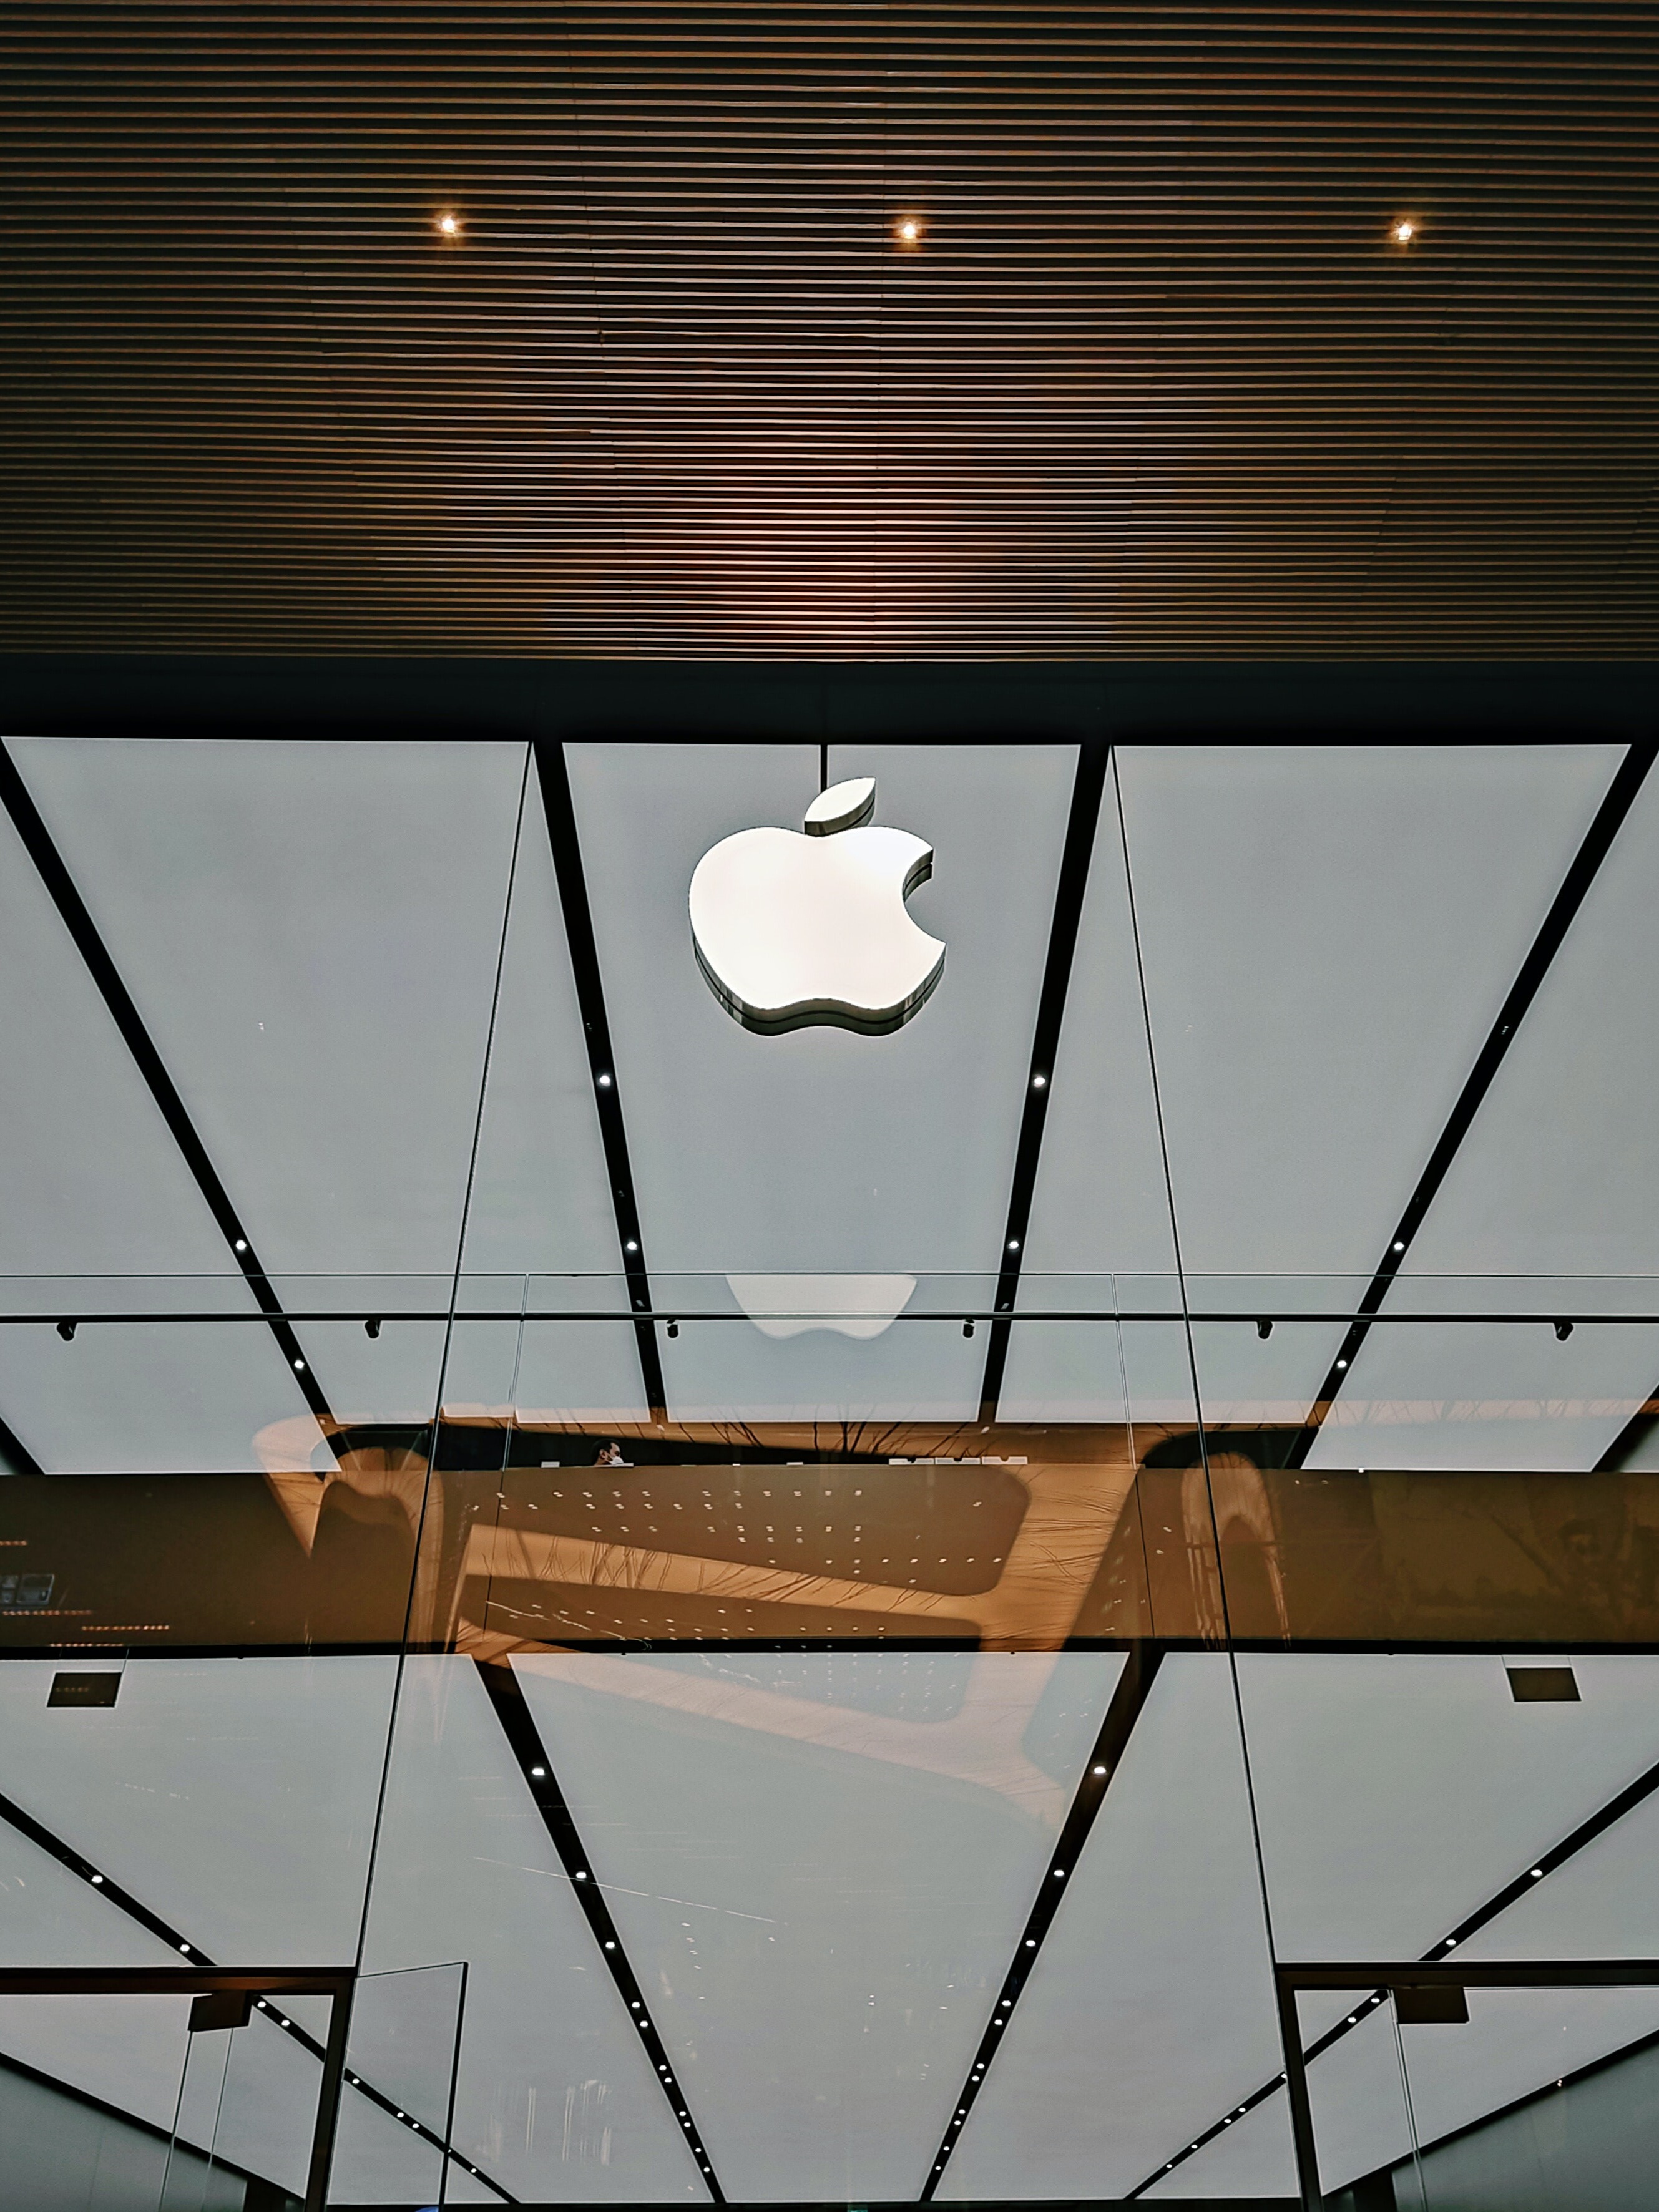 Apple Accused Of ‘Racial Bias’ In A New Lawsuit